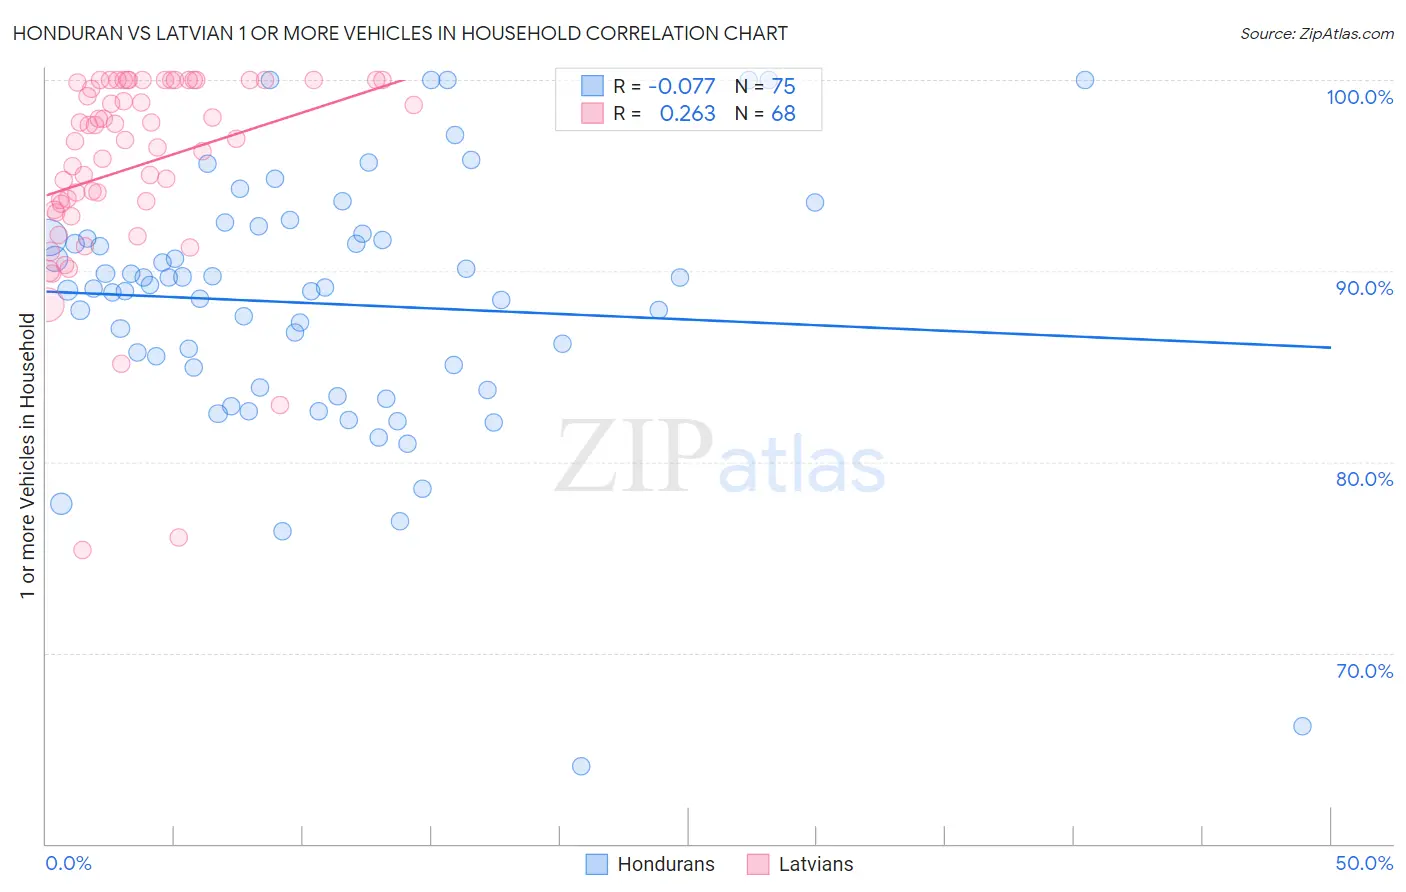 Honduran vs Latvian 1 or more Vehicles in Household